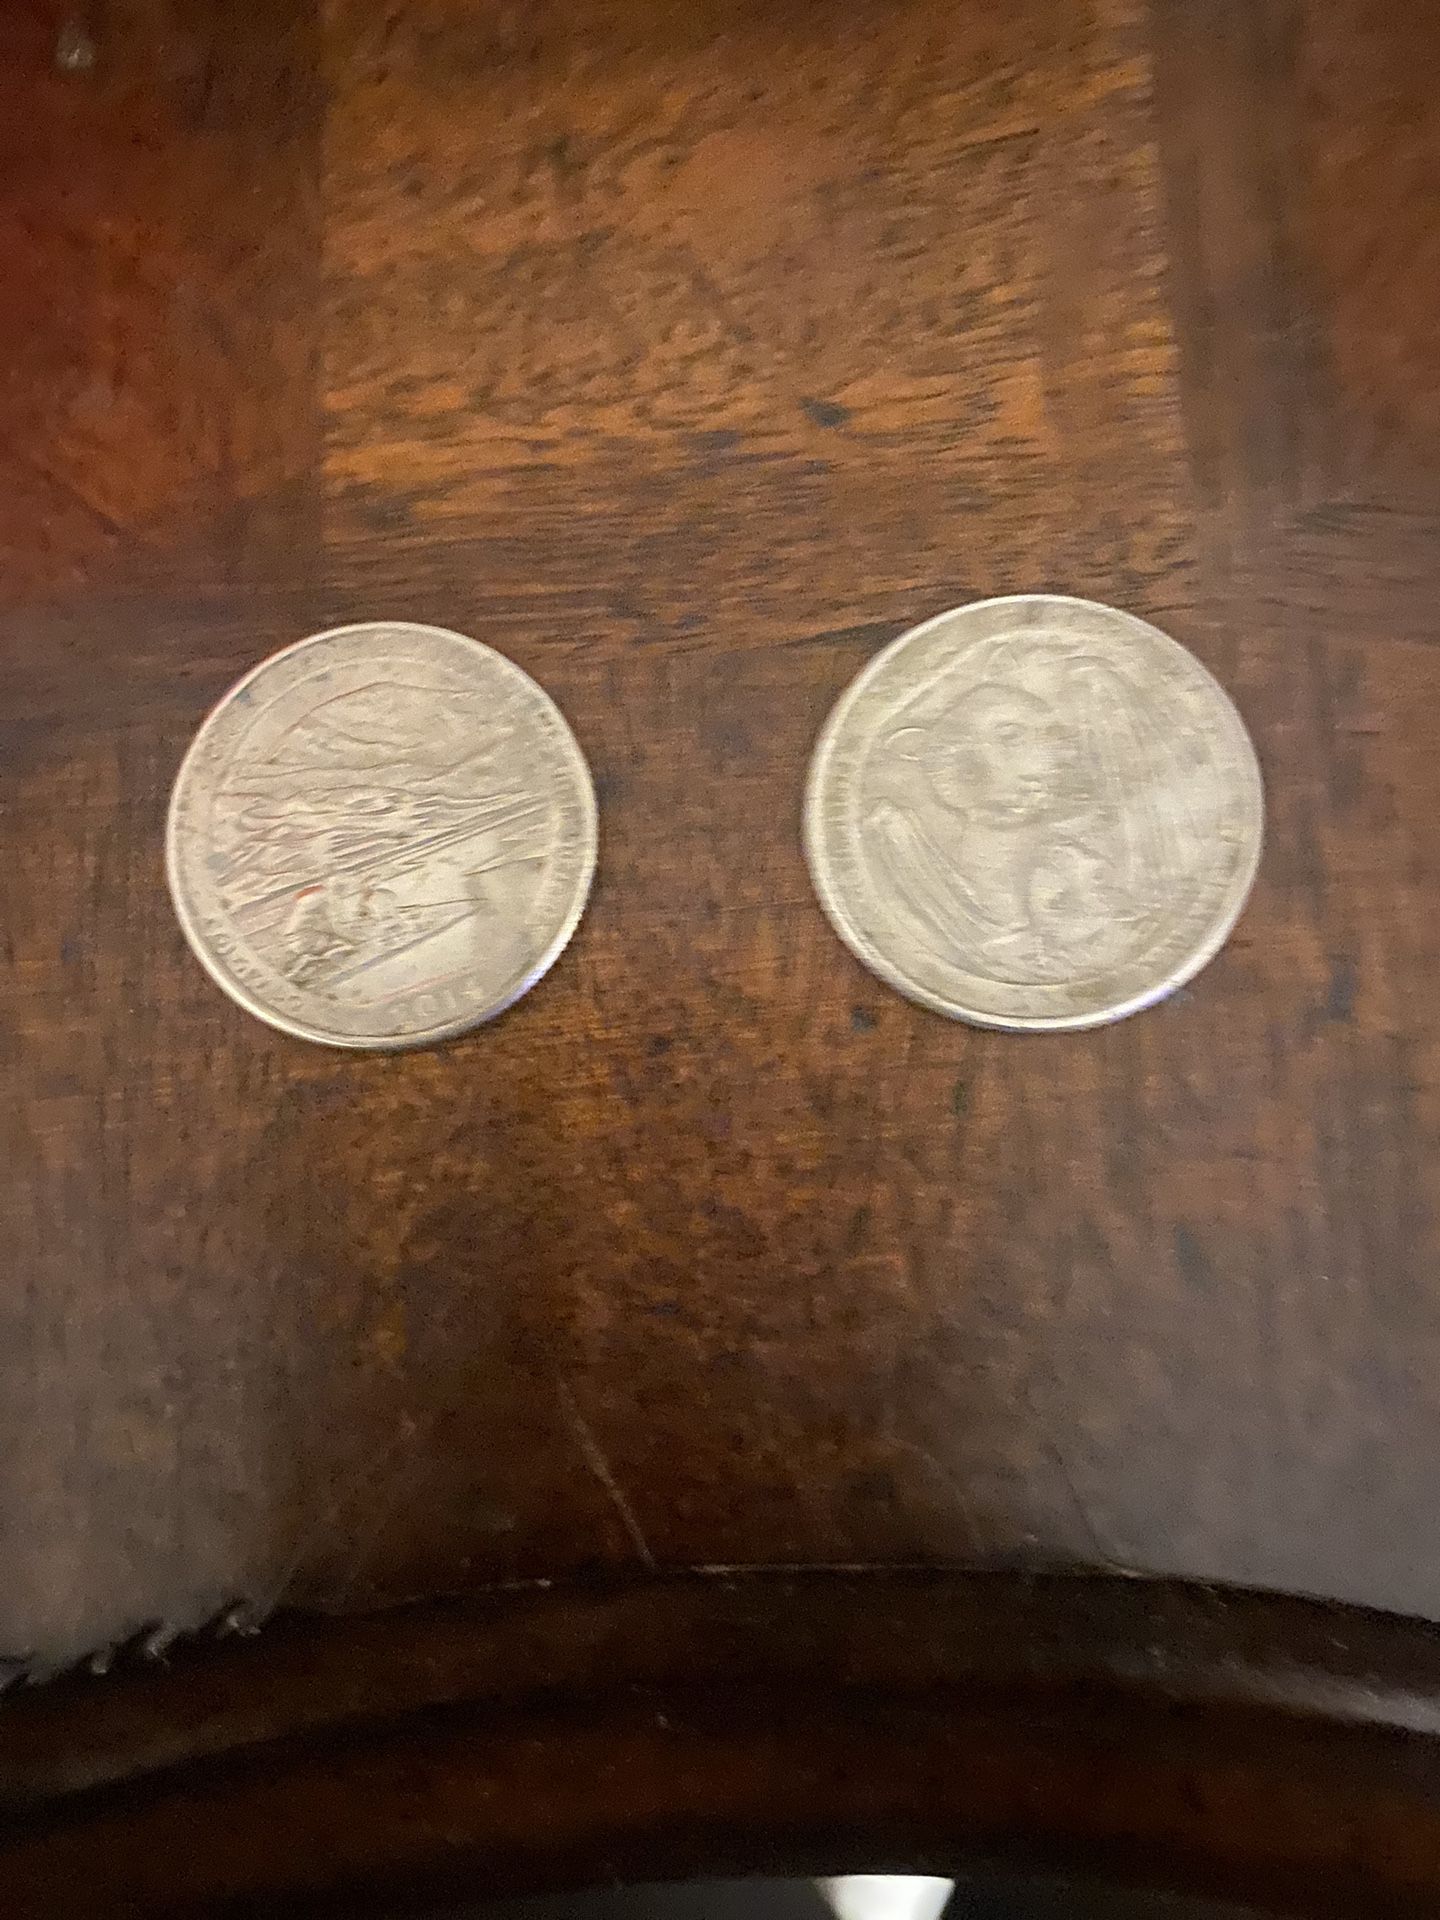 Rear Coins